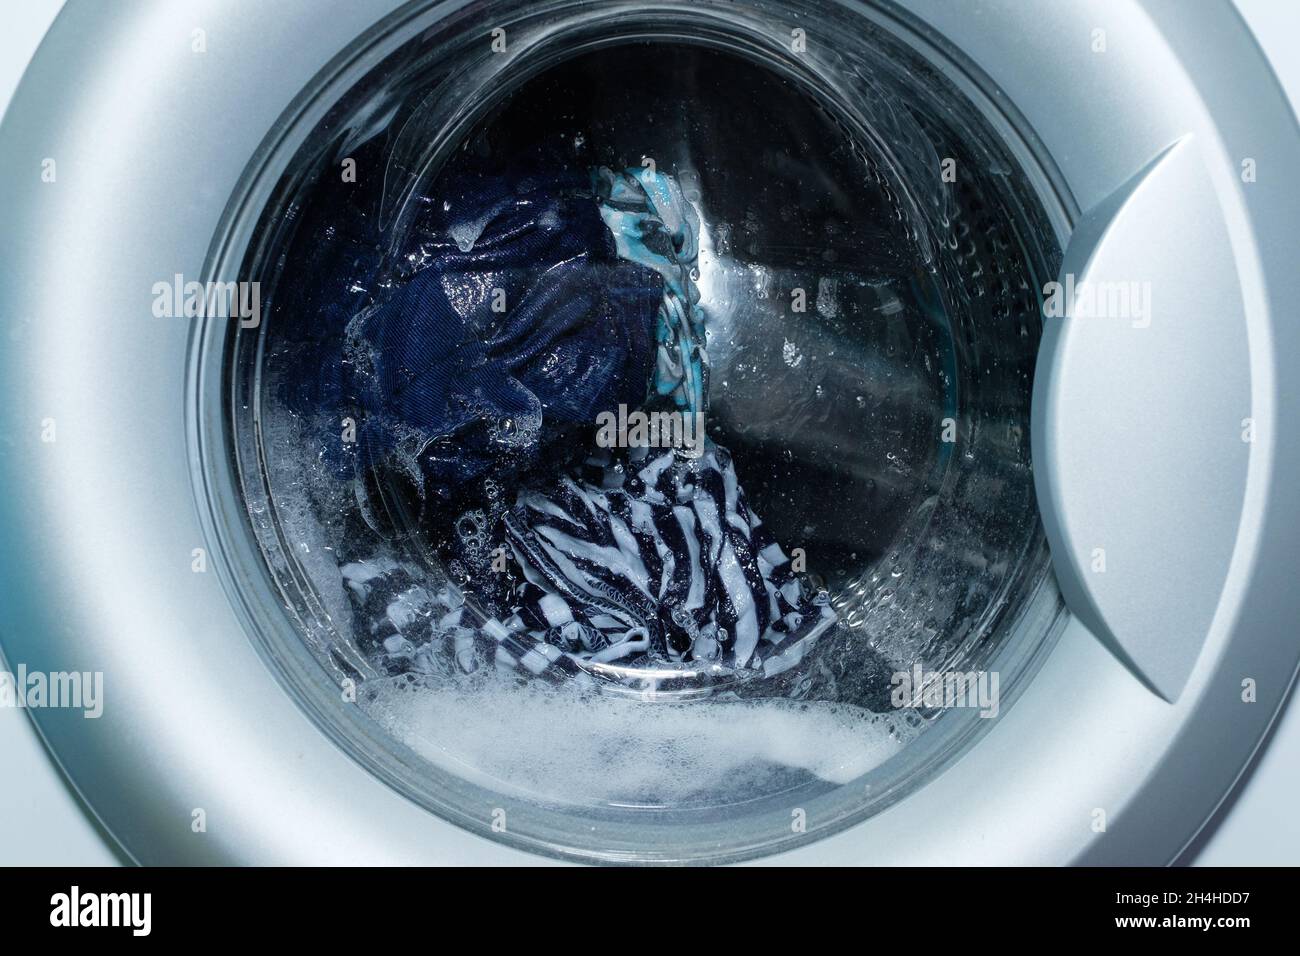 Linen washing in the washing machine. Stock Photo